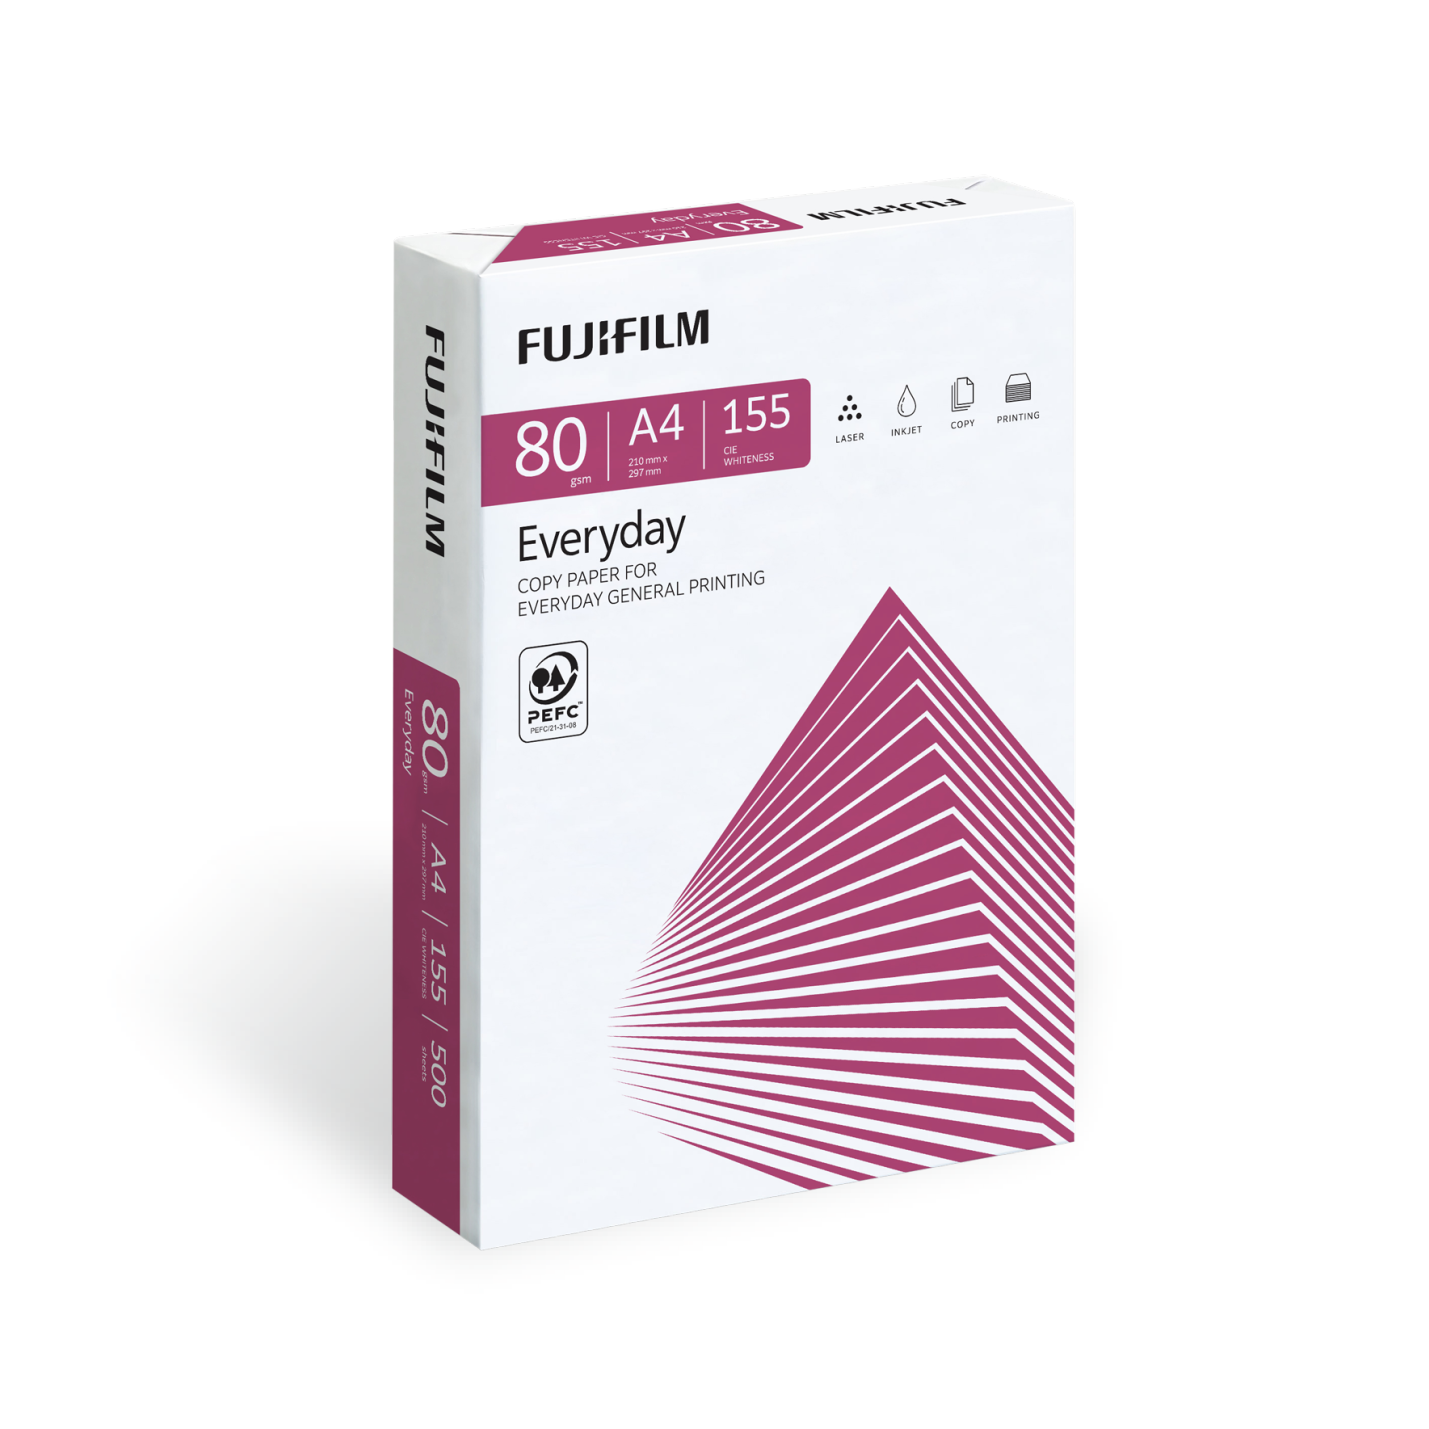 Fujifilm A4 Everyday Copy Paper 80gsm 500 sheets